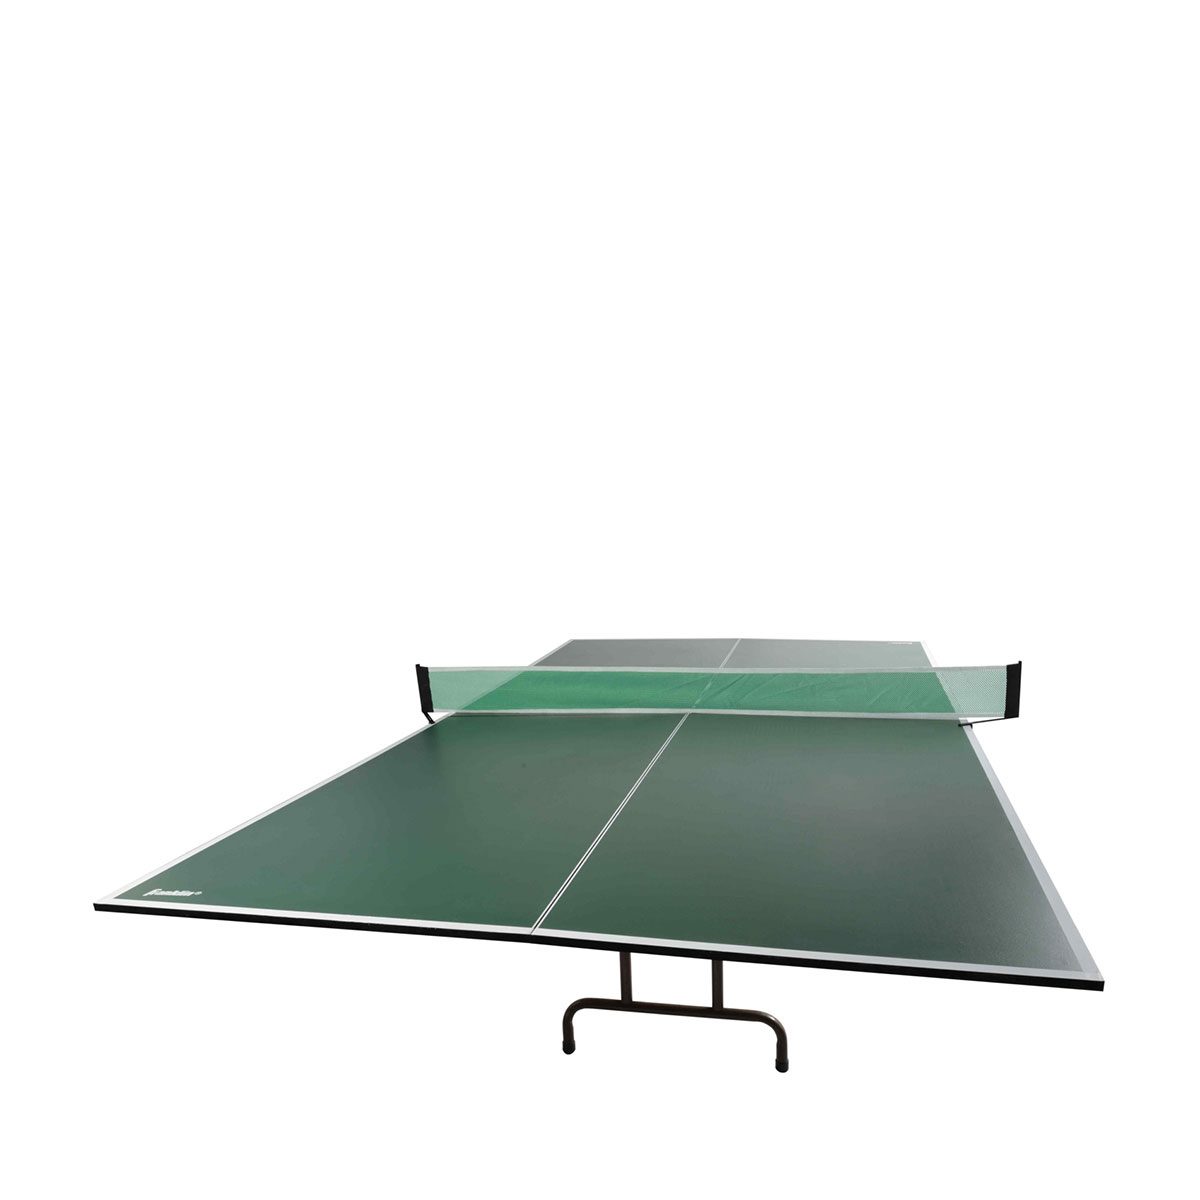 1200x1200-Games-Table-Tennis